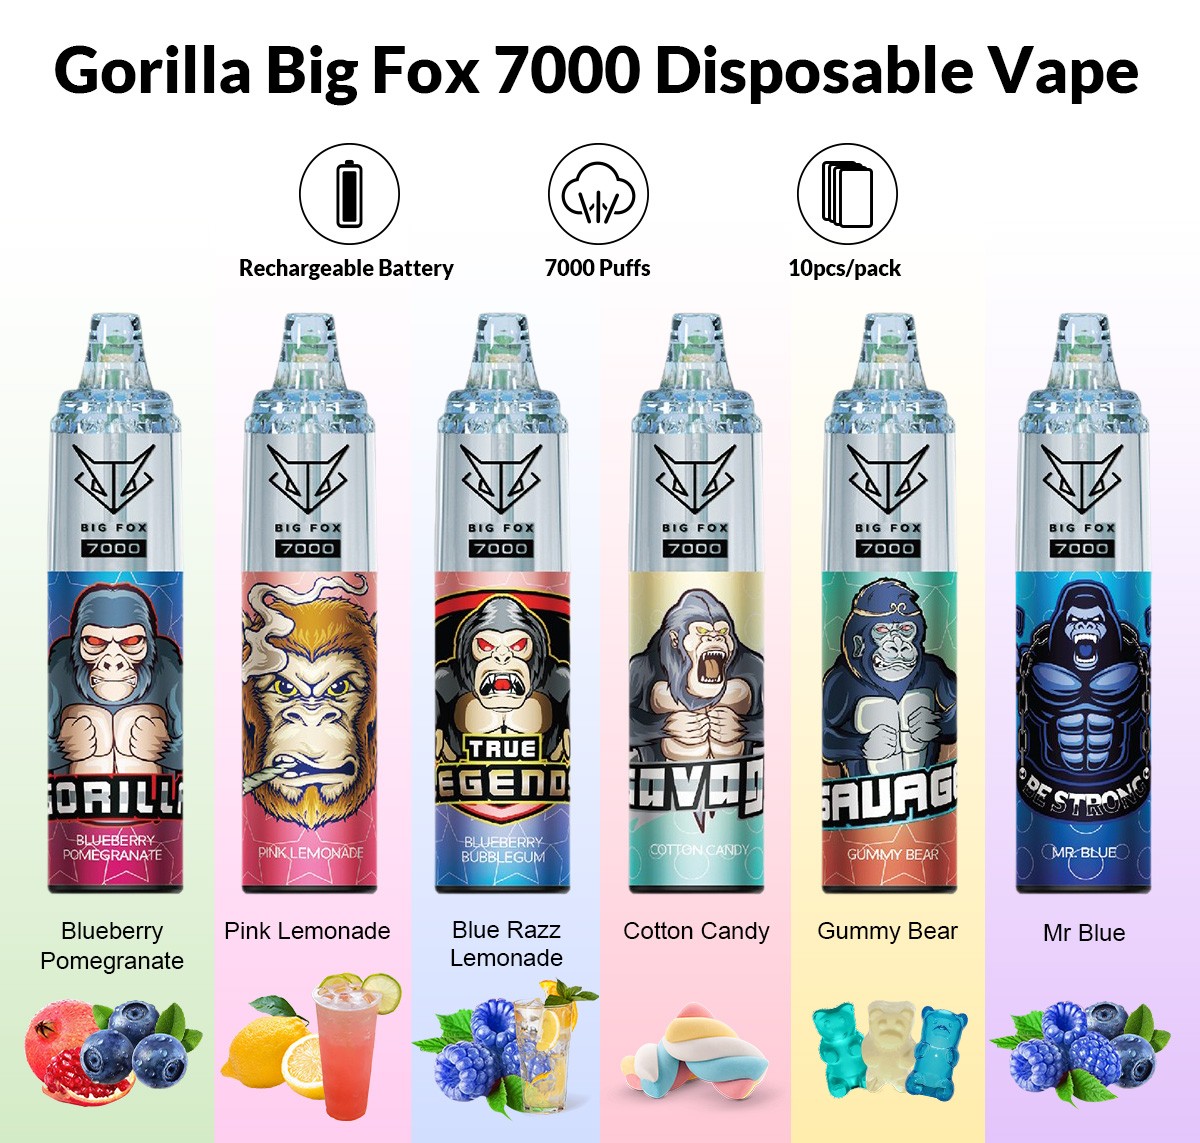 Gorilla Big Fox 7000